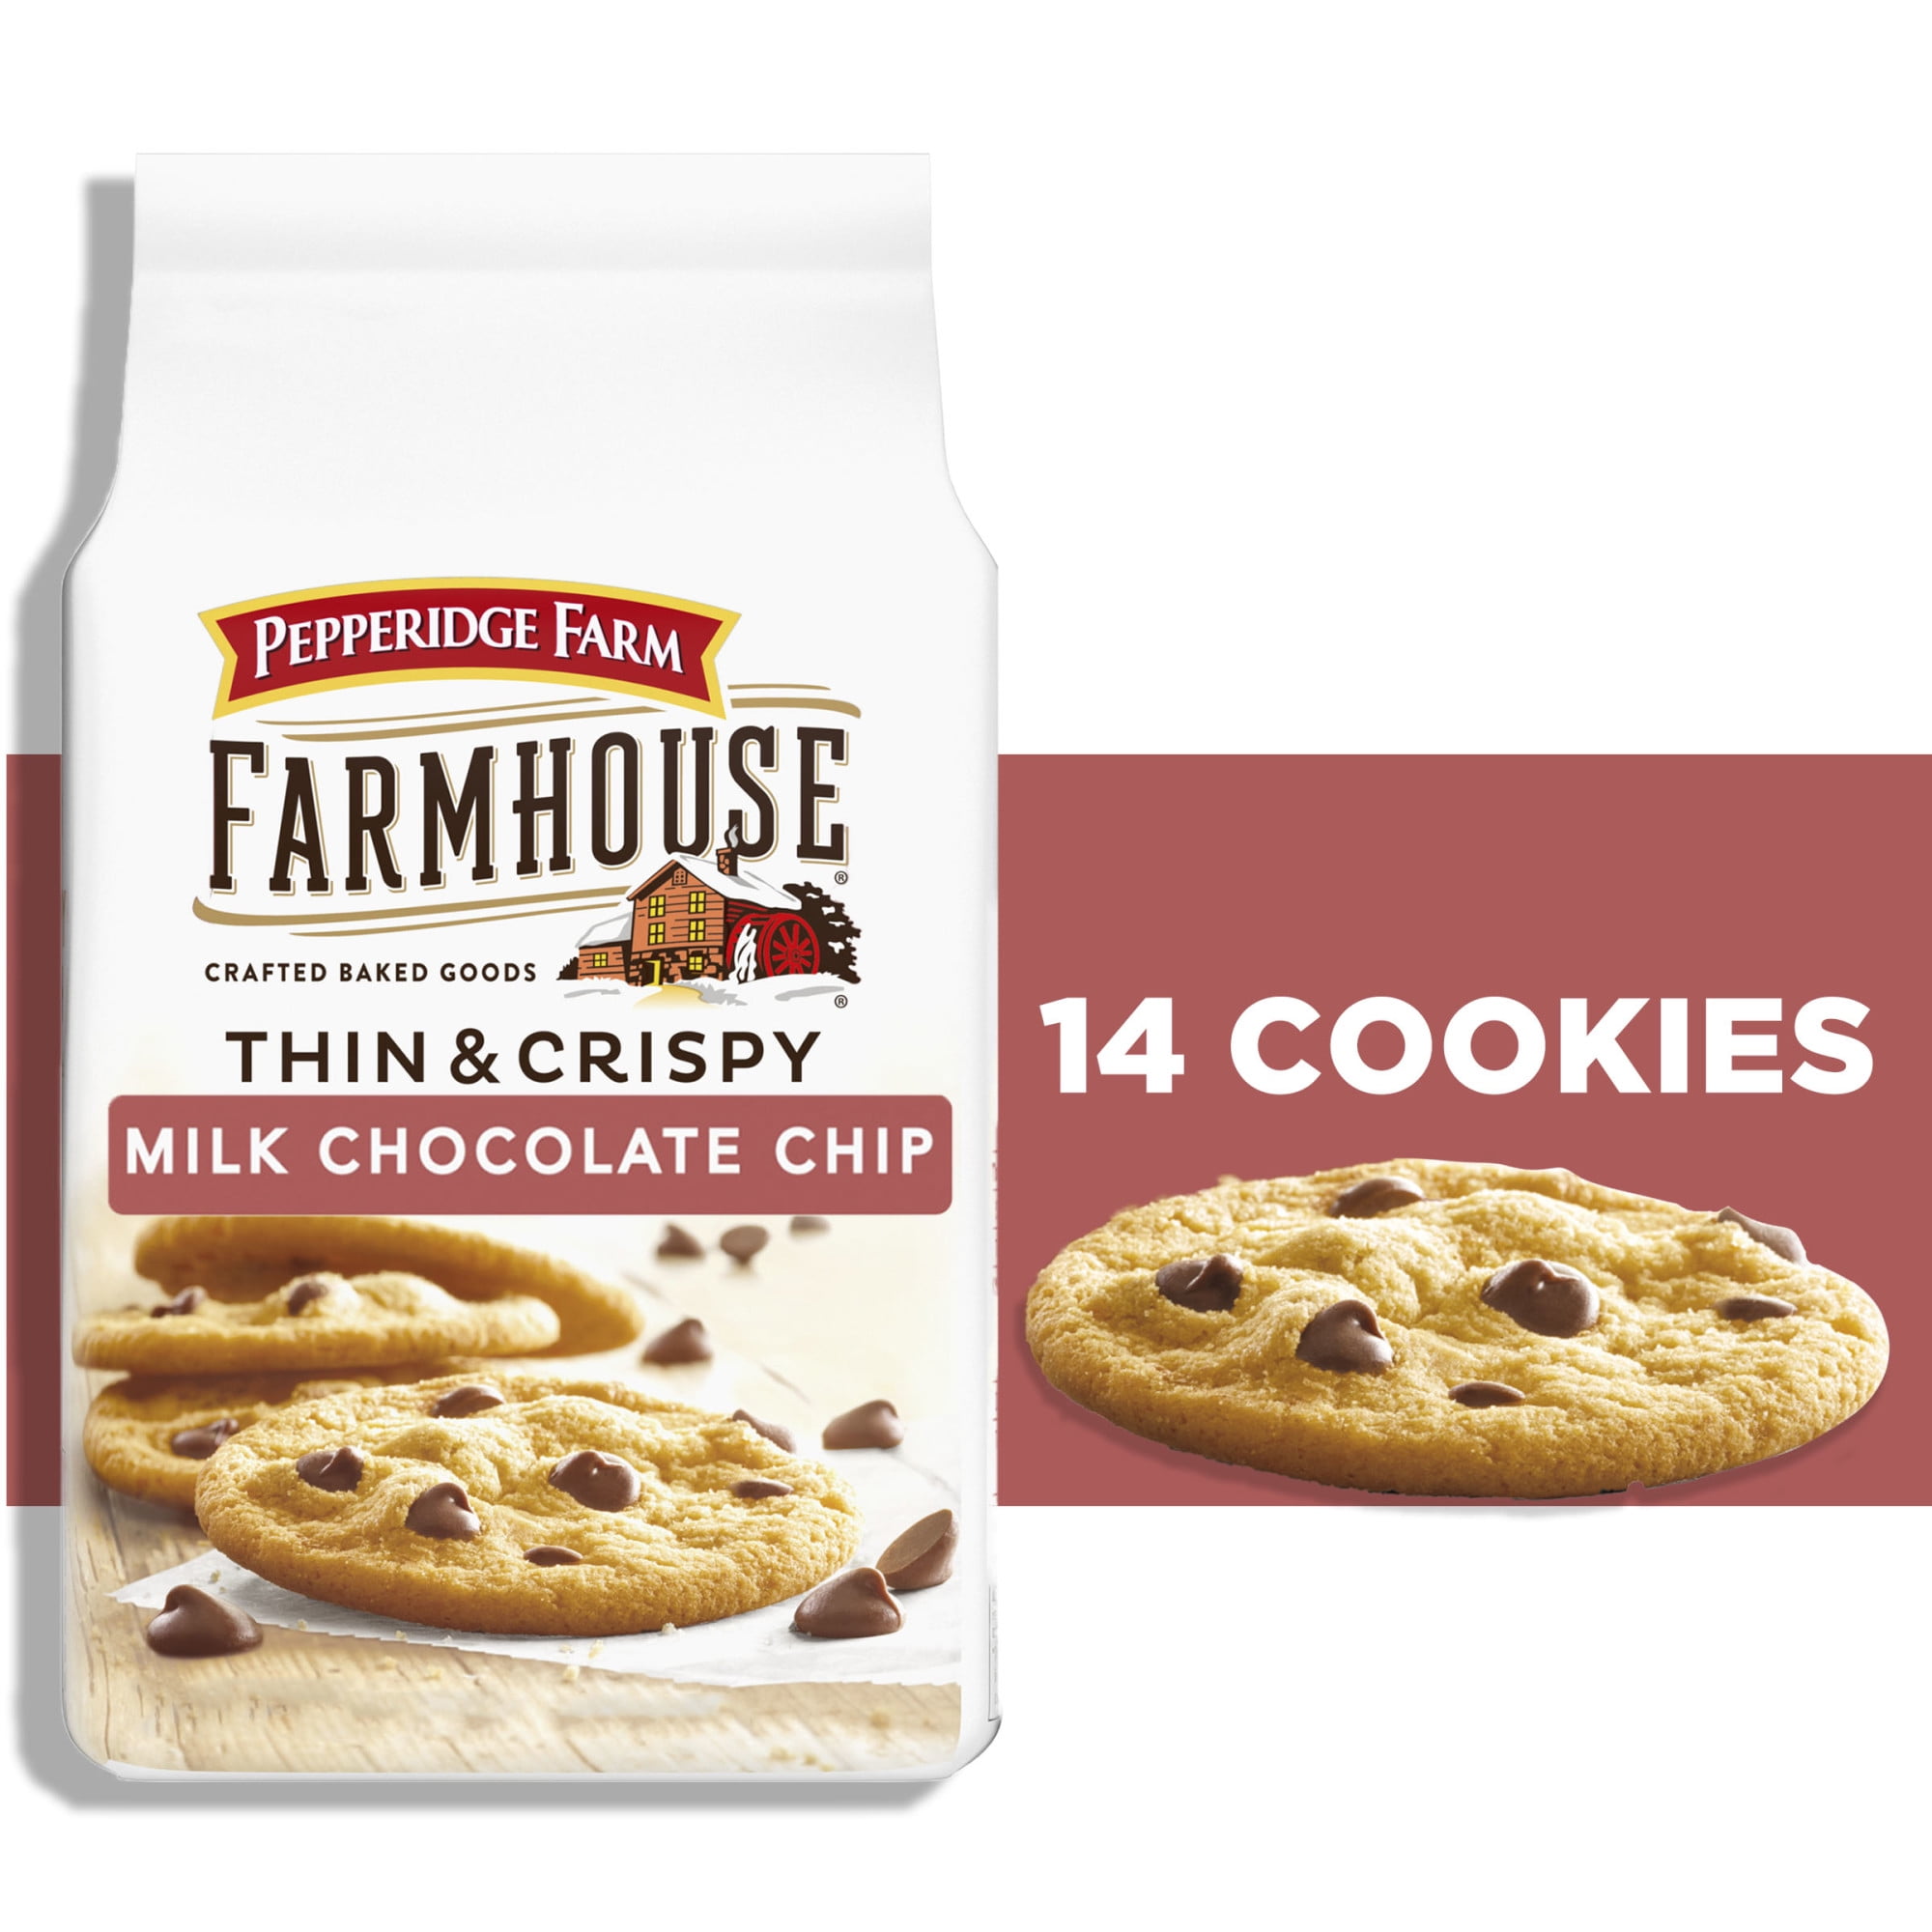 Partake Foods Chocolate Chip Cookies - Crunchy Reviews